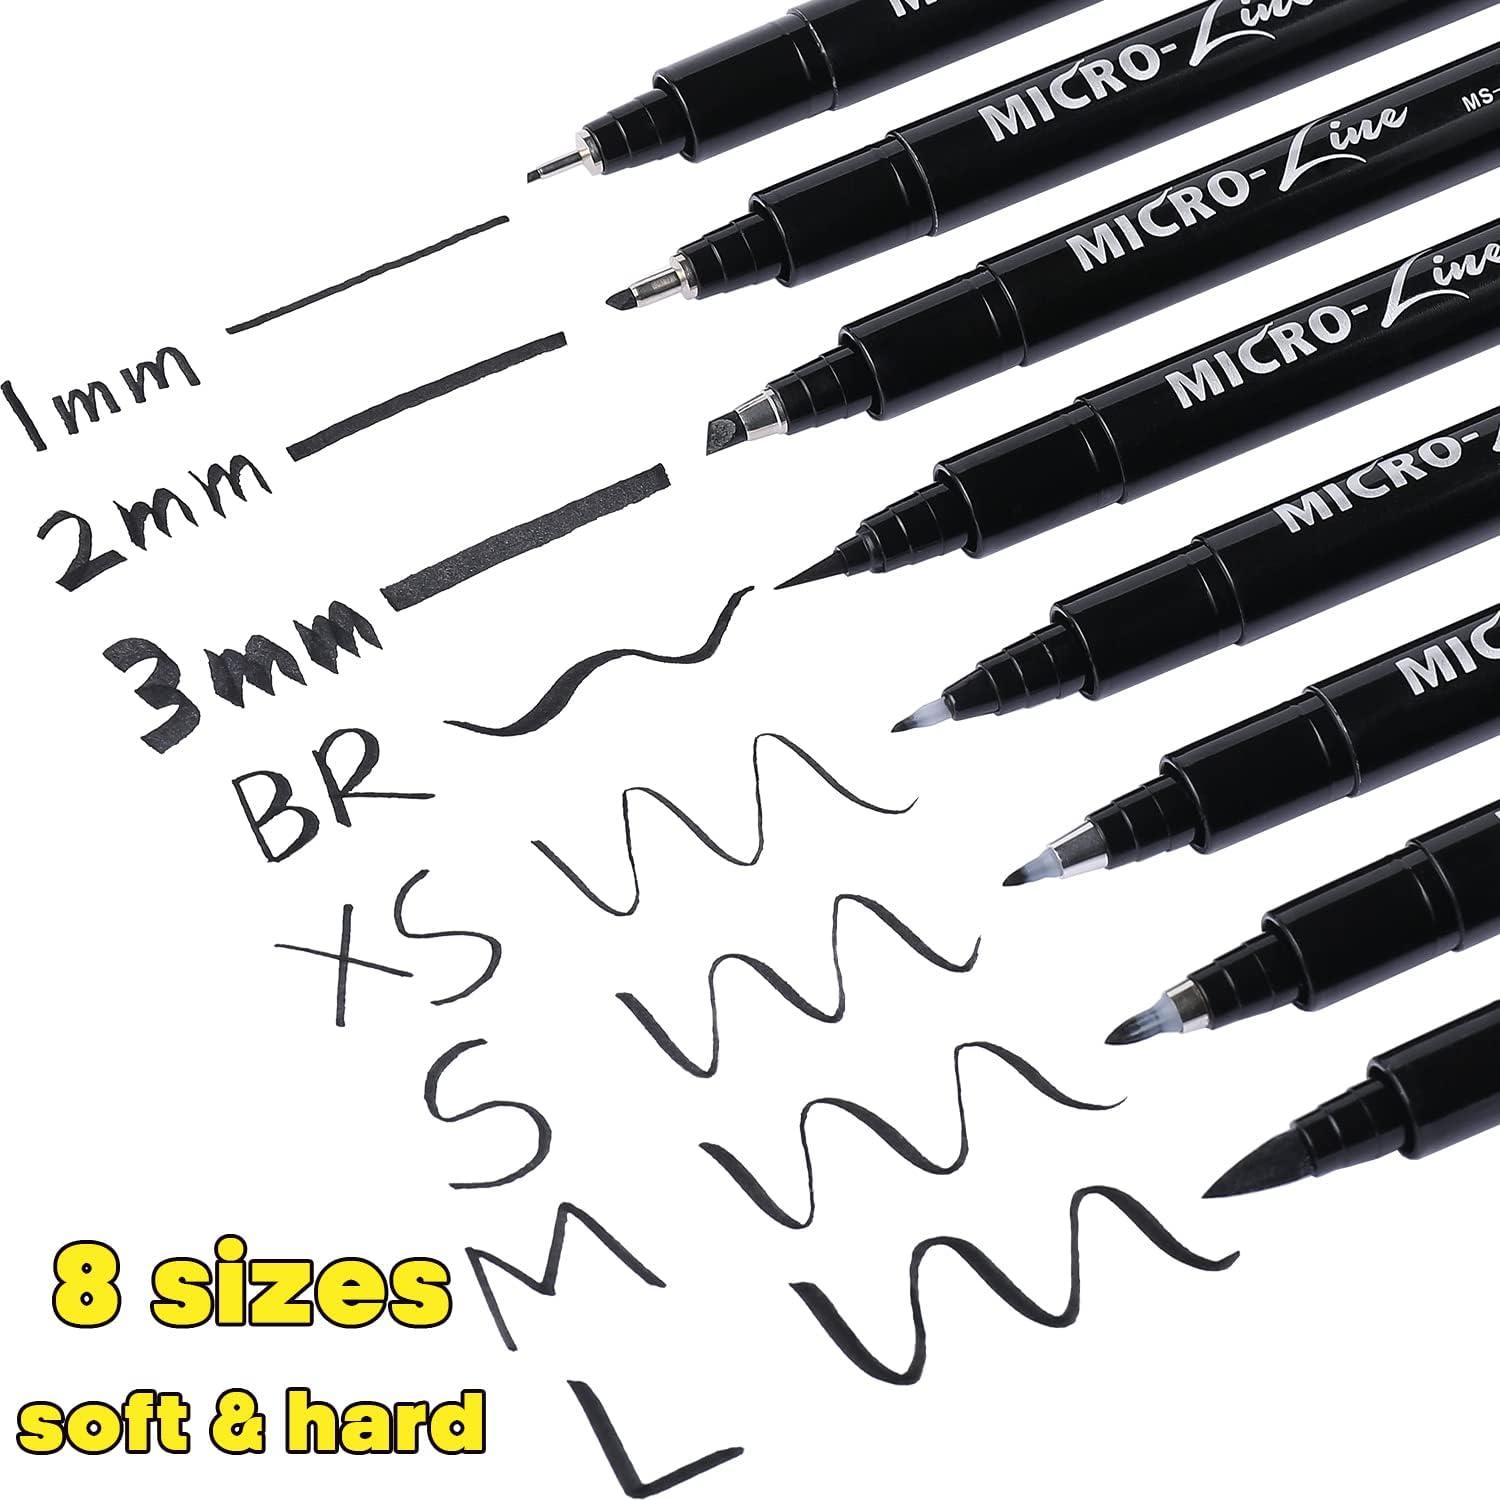 Metallic Brush Pen, Metallic Markers, Brush Pens, Brush Pen Set,  Calligraphy Markers, Colourful Brush Pens, Journal Pens, Scrapbooking Pens  